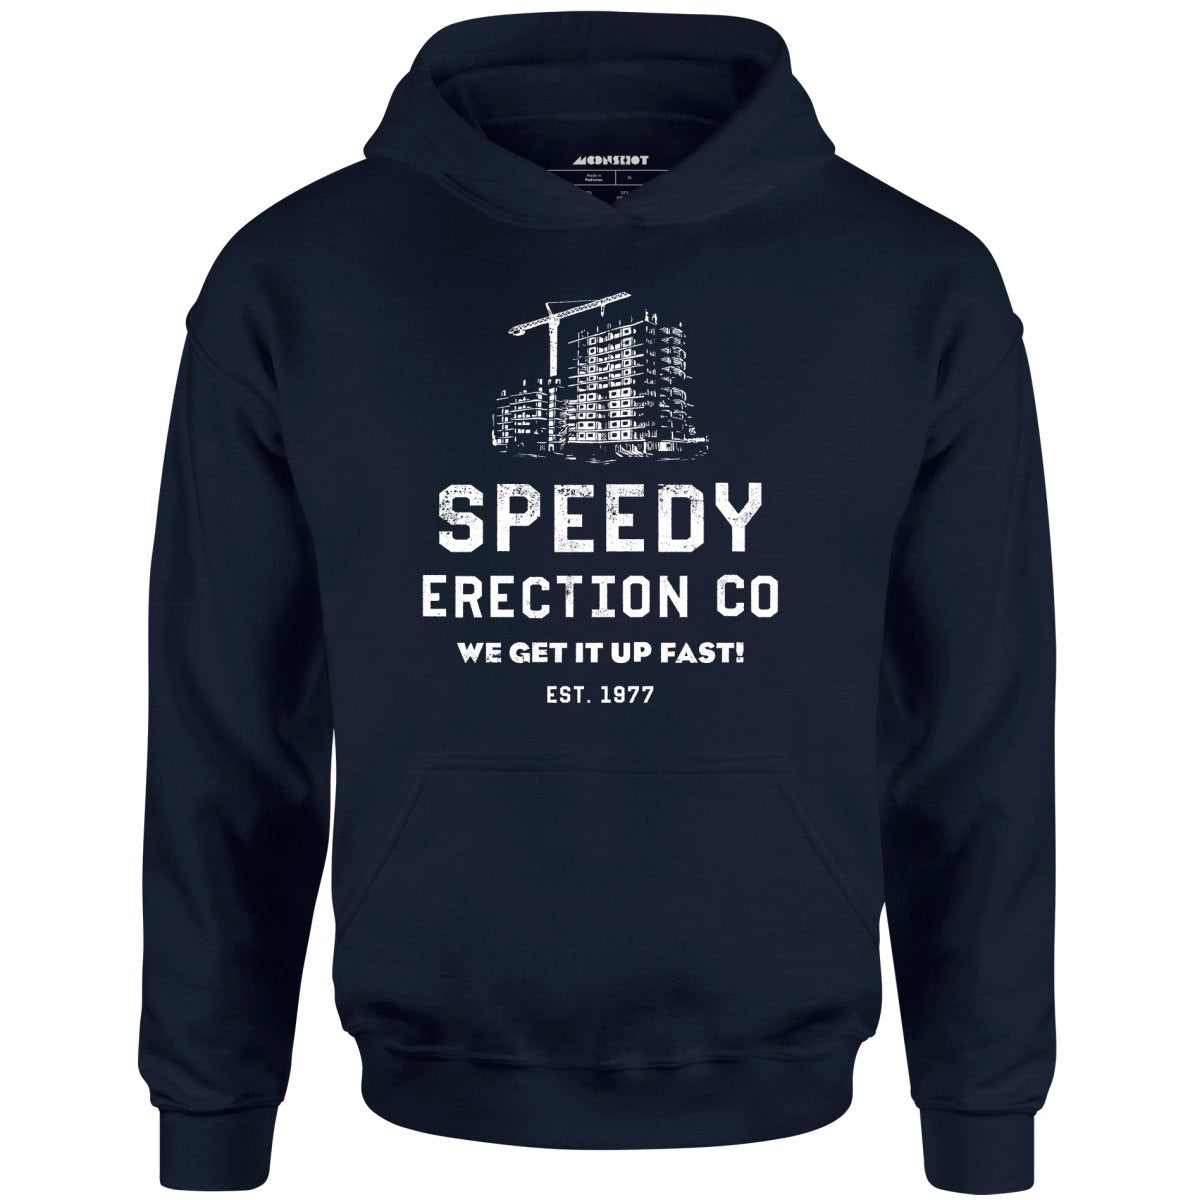 Speedy Erection Co. We Get it Up Fast - Unisex Hoodie